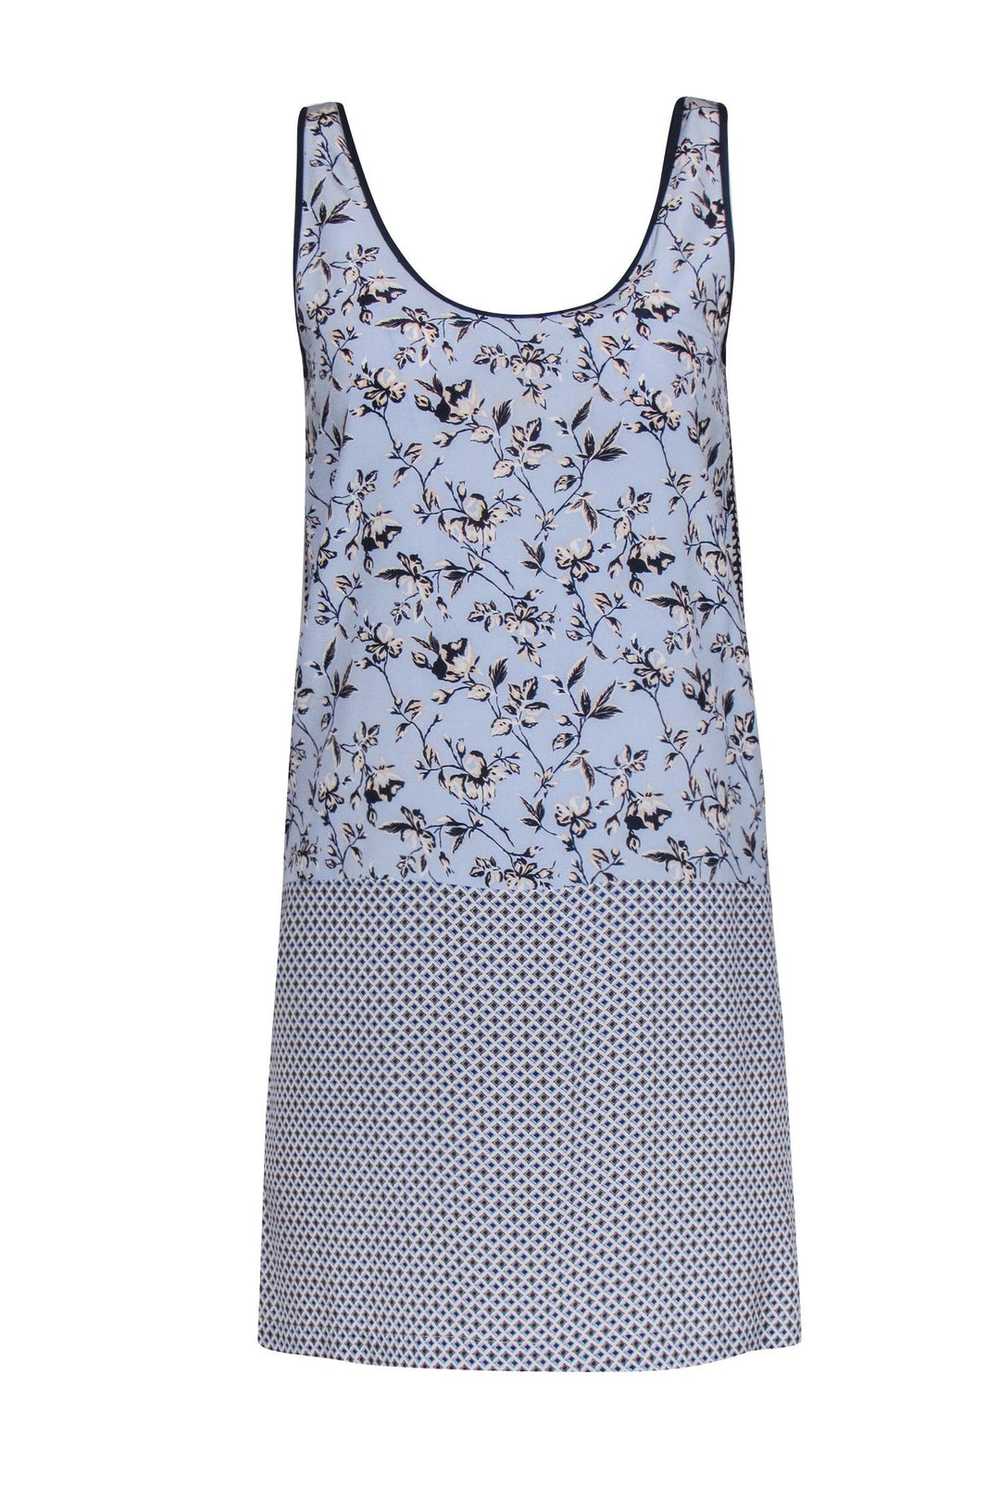 Joie - Blue Multi-Print Silk Shift Dress Sz XS - image 1